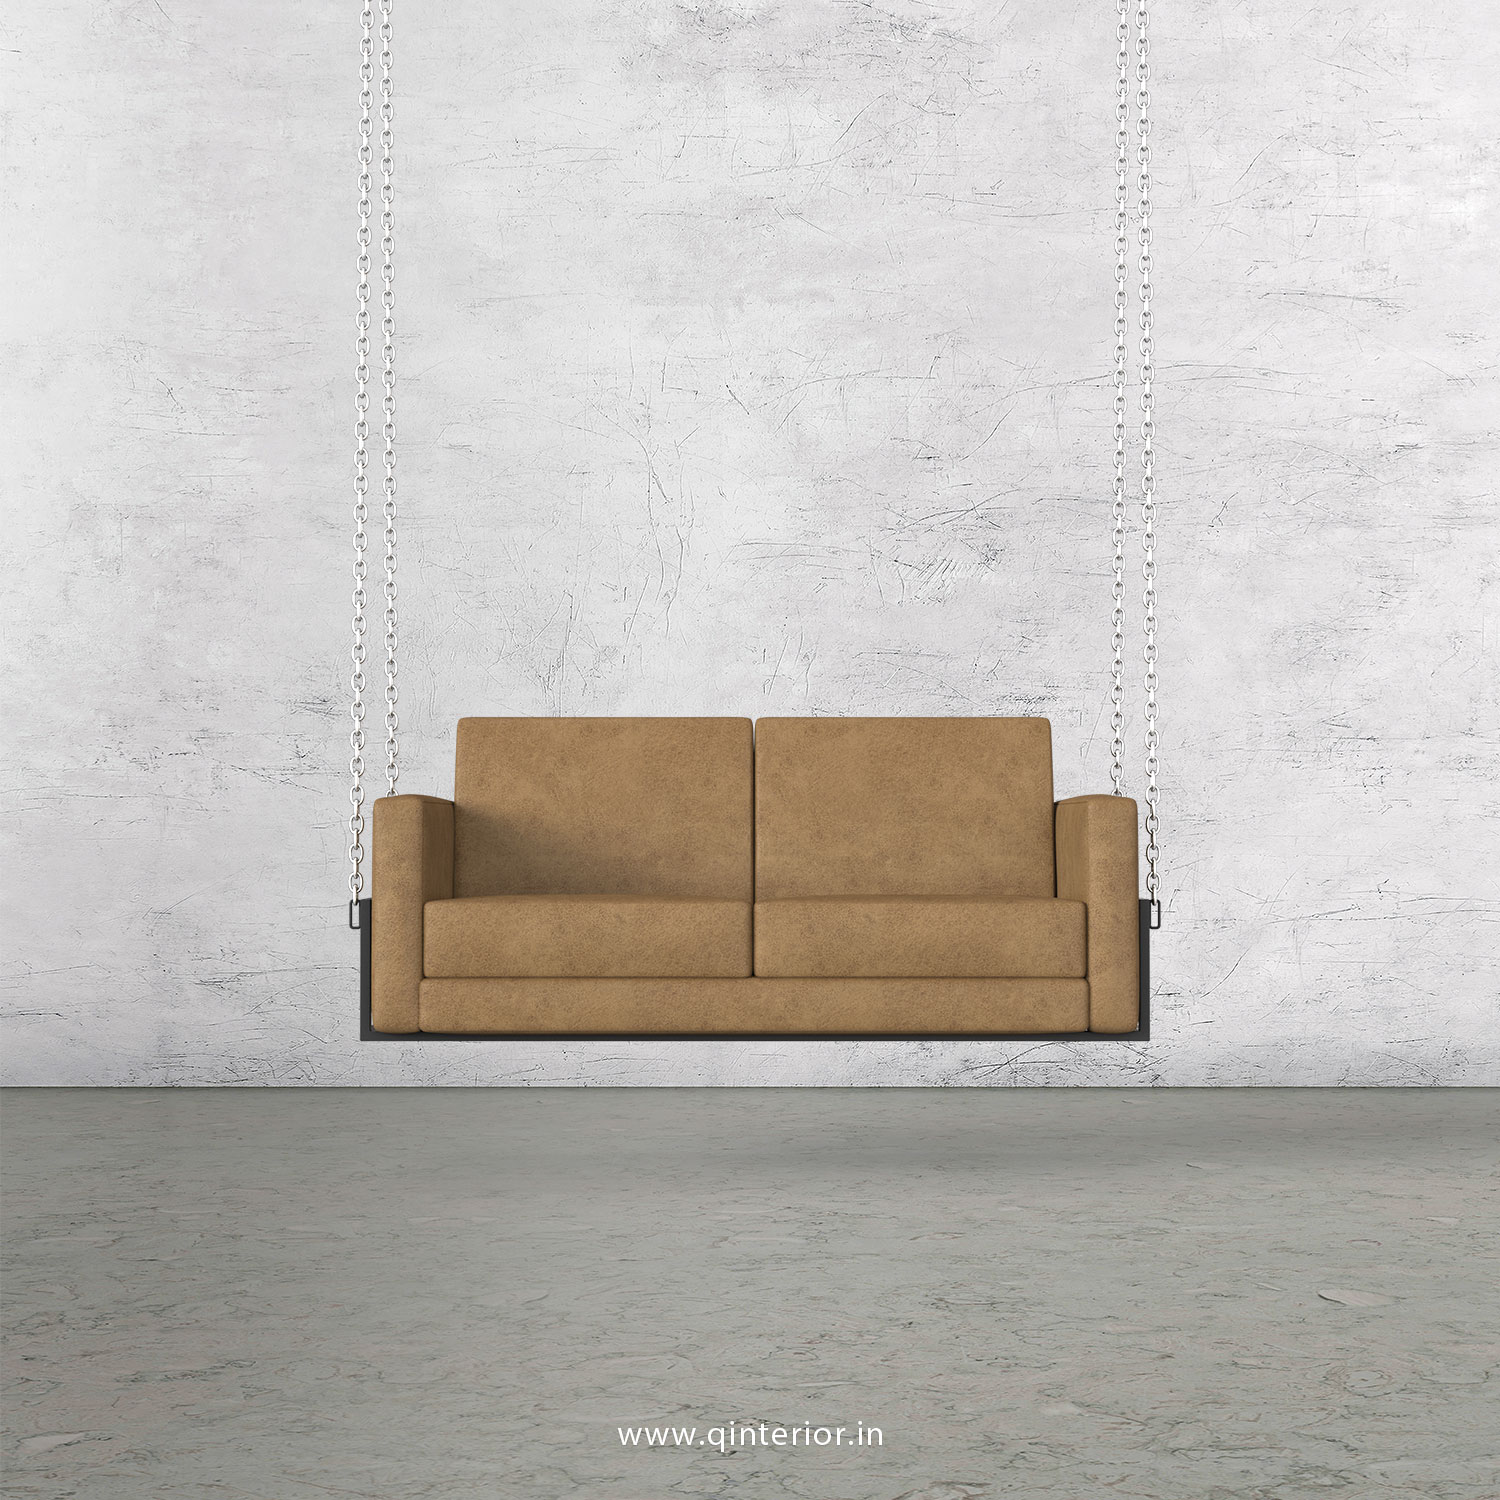 NIRVANA 2 Seater Swing Sofa in Fab Leather Fabric - SSF001 FL02